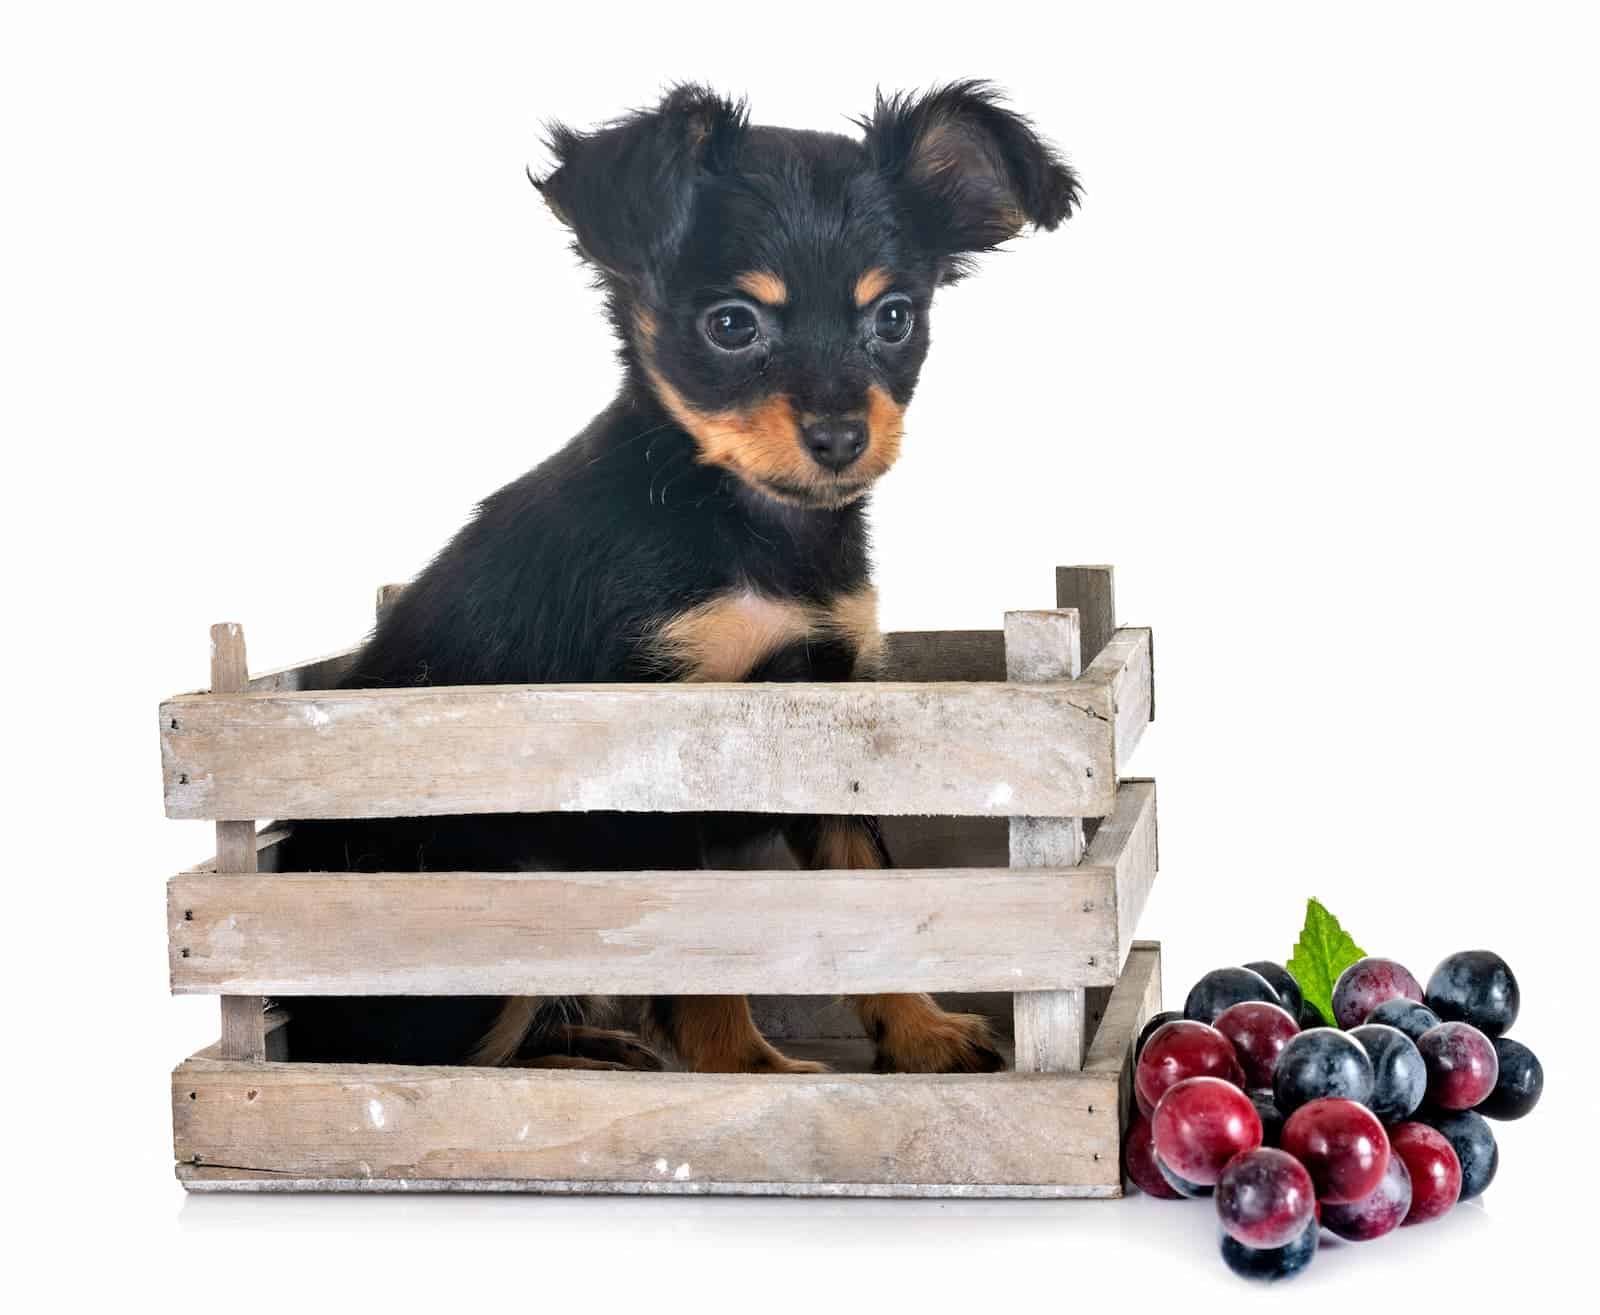 Cachorro pode comer uva?